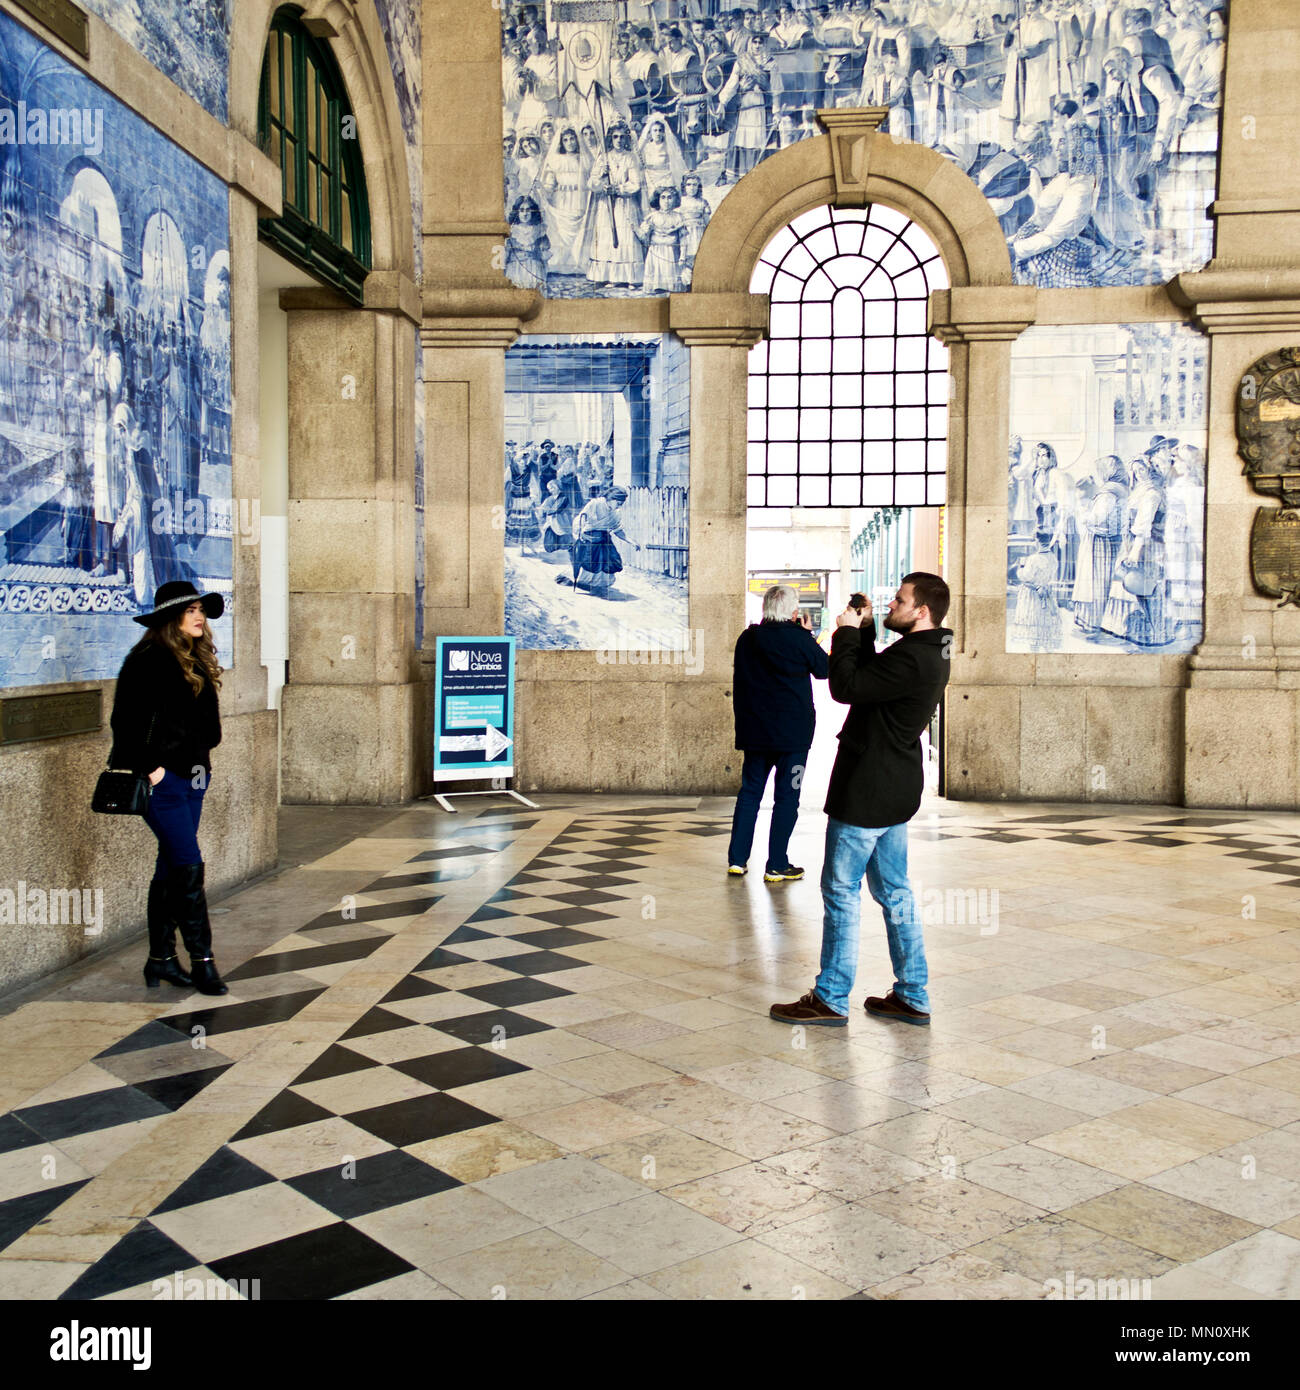 A man takes a photo of a woman using a small camera inside the Sao Bento railway station, Porto, Portugal Stock Photo